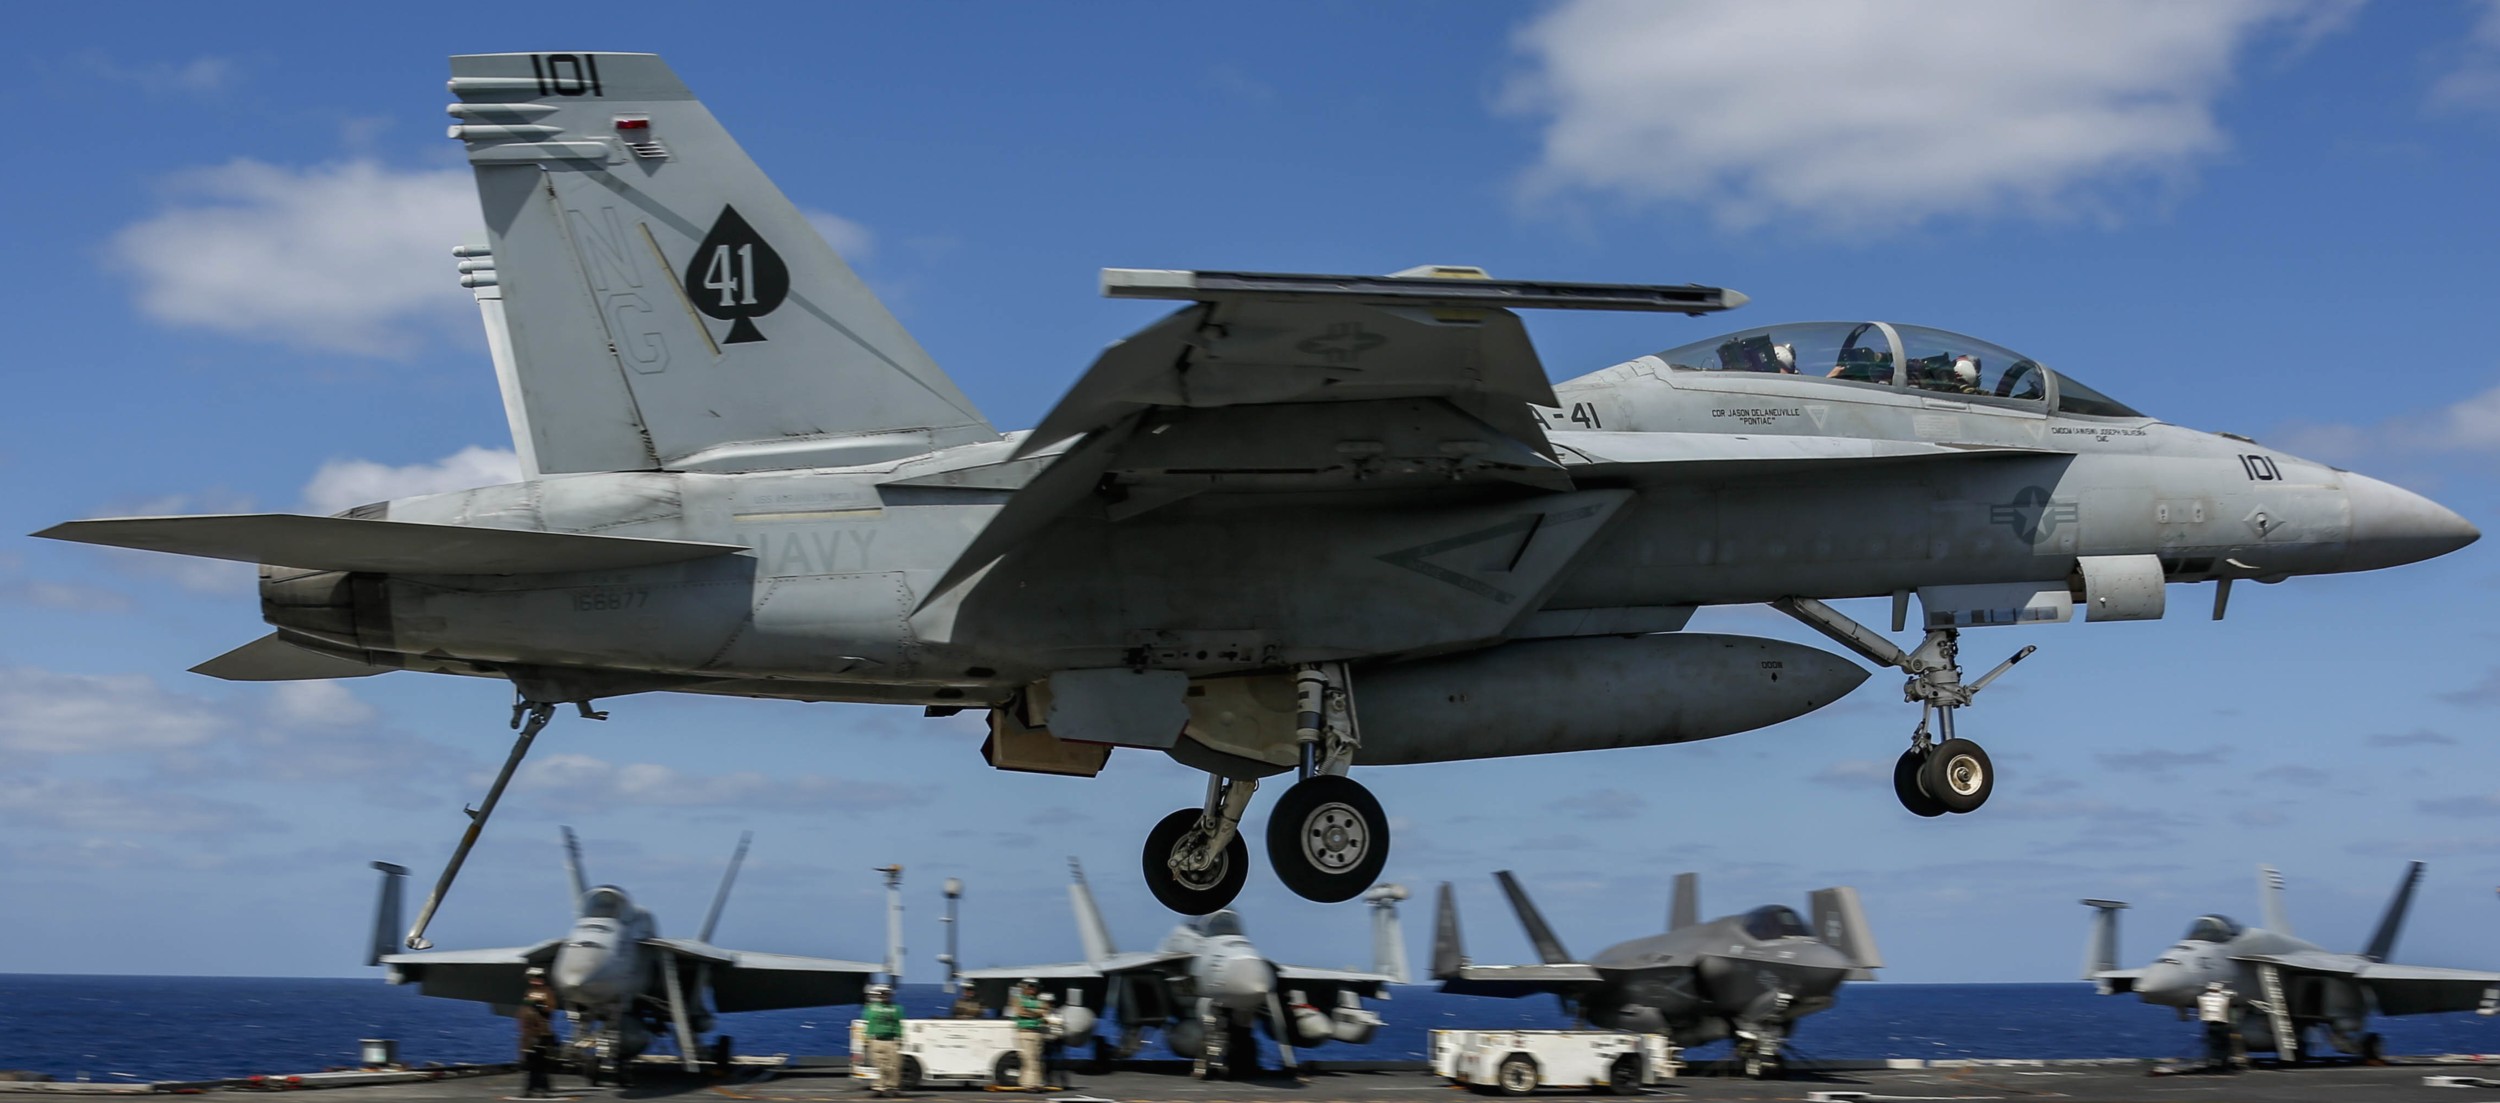 vfa-41 black aces strike fighter squadron f/a-18f super hornet cvw-9 cvn-72 uss abraham lincoln us navy 77